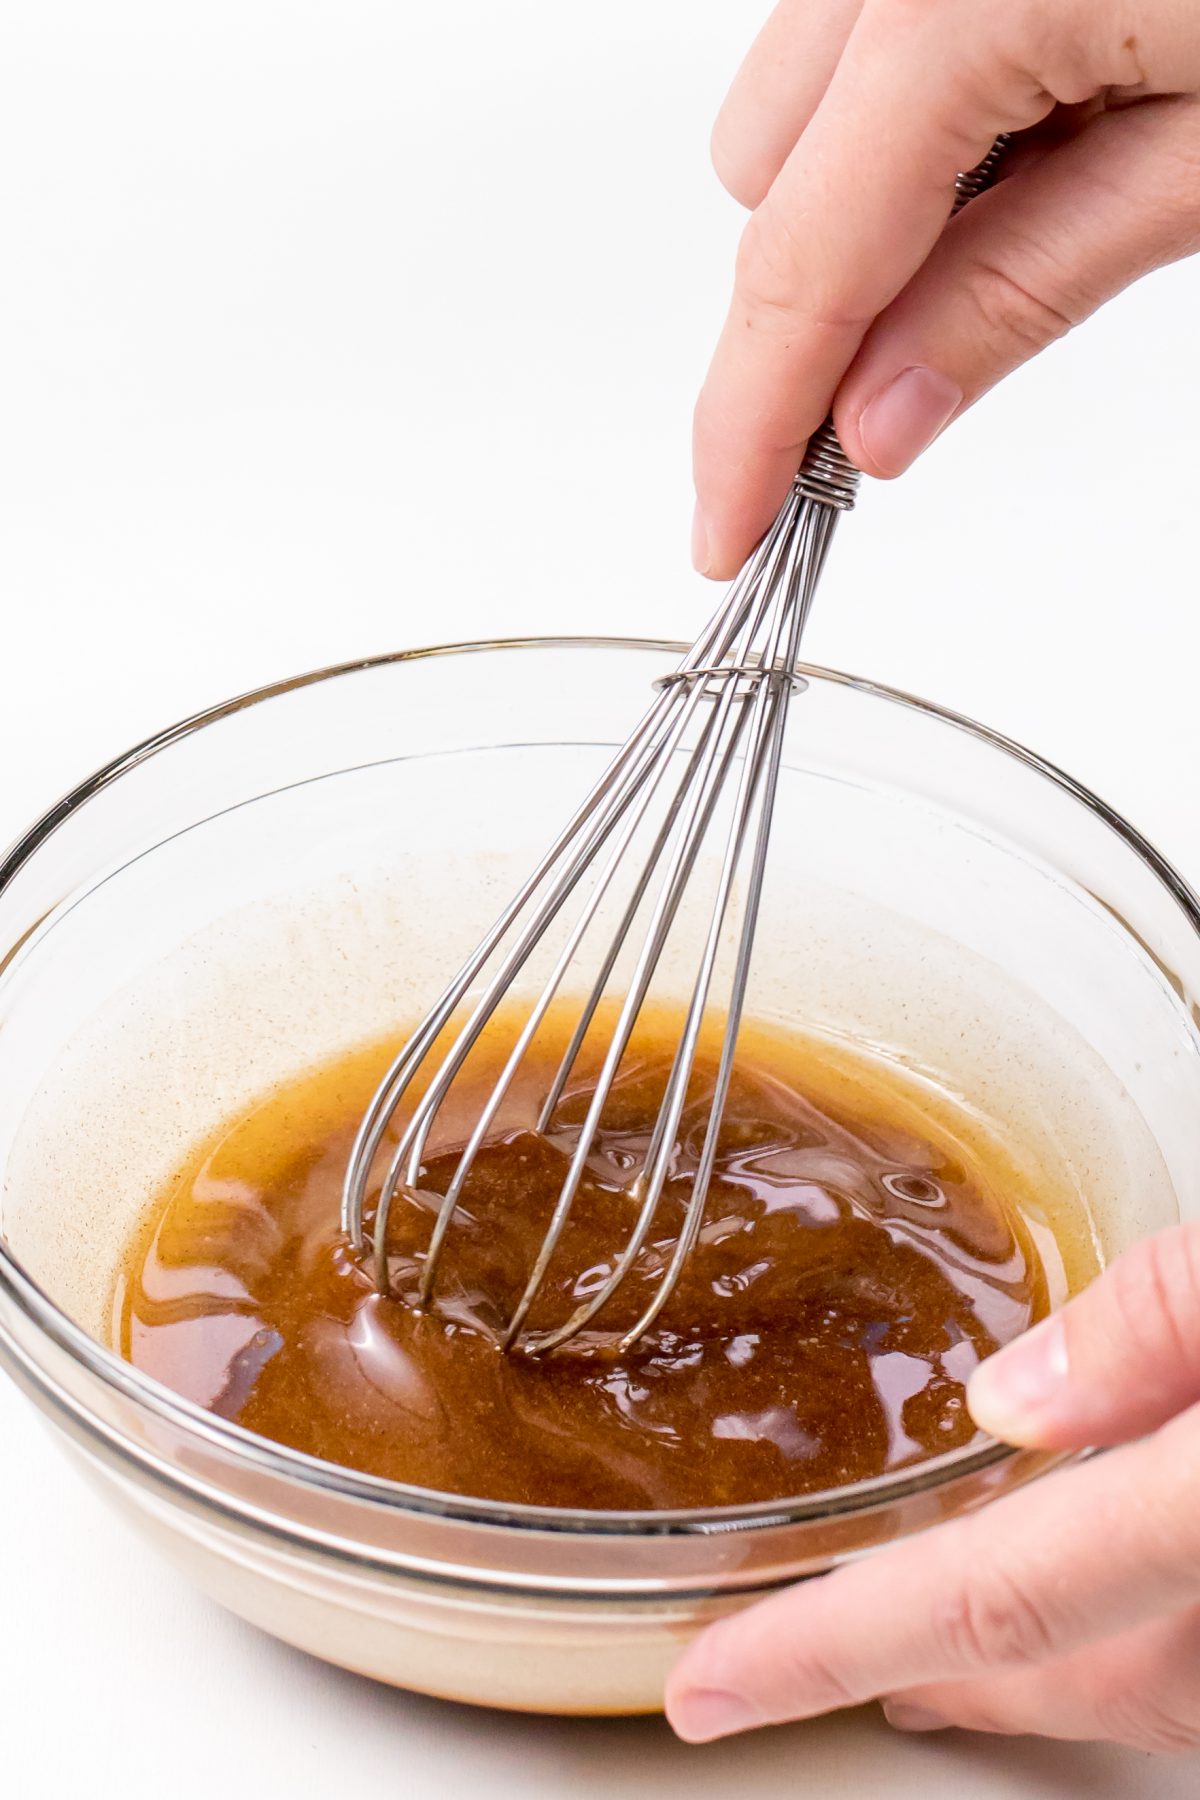 Create sugar topping